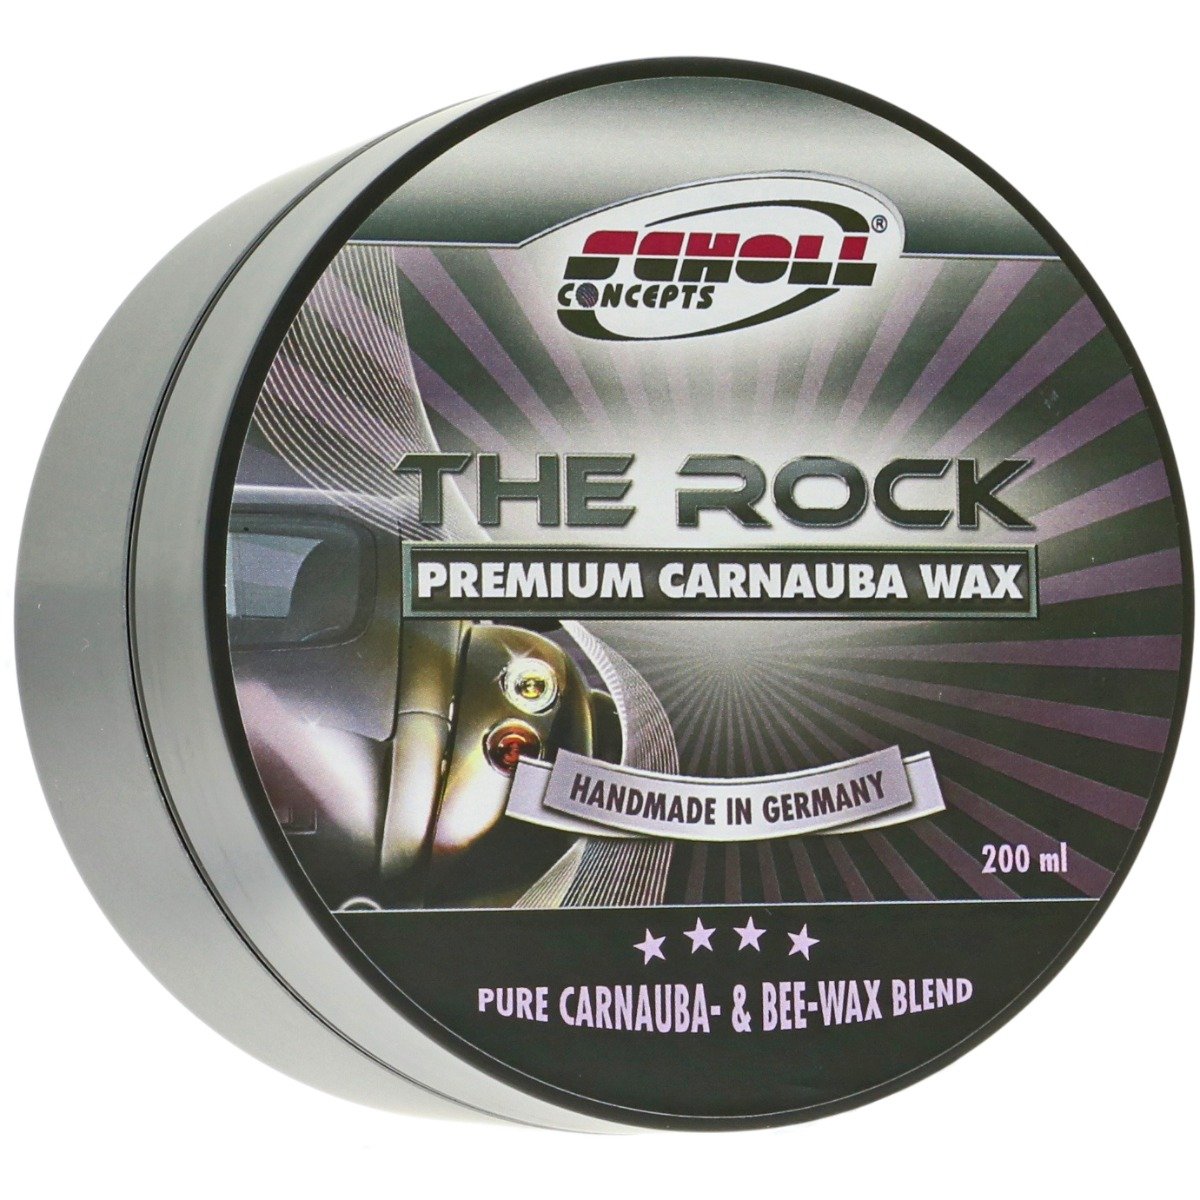 The Rock Premium Carnauba Wax - 200ml